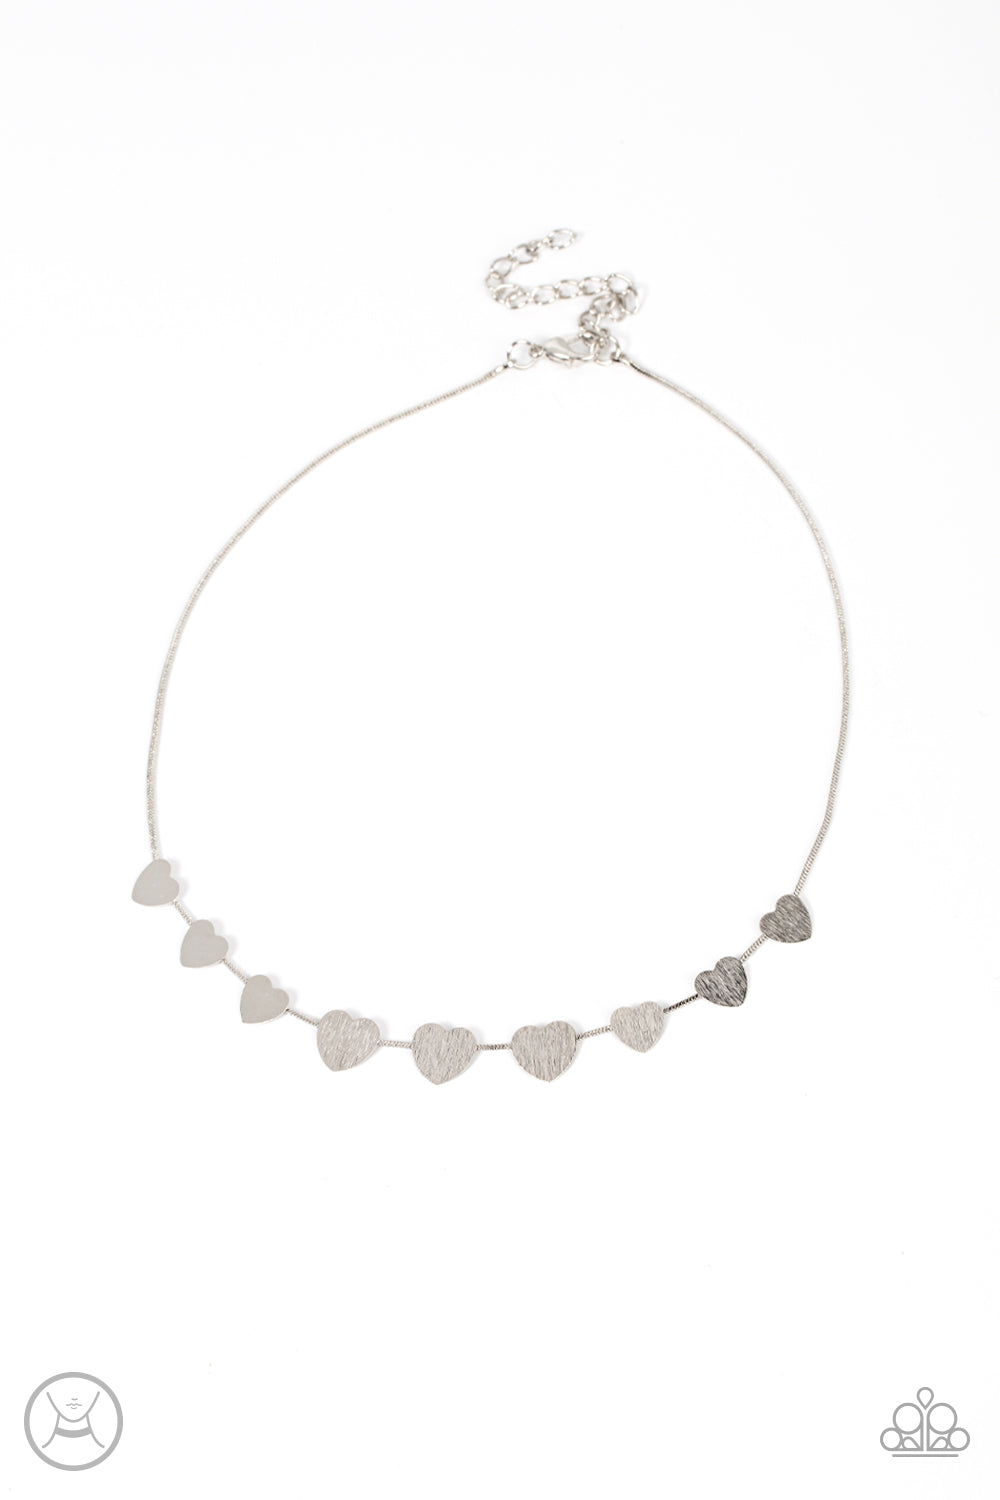 Dainty Desire - Silver (Heart) Necklace freeshipping - JewLz4u Gemstone Gallery